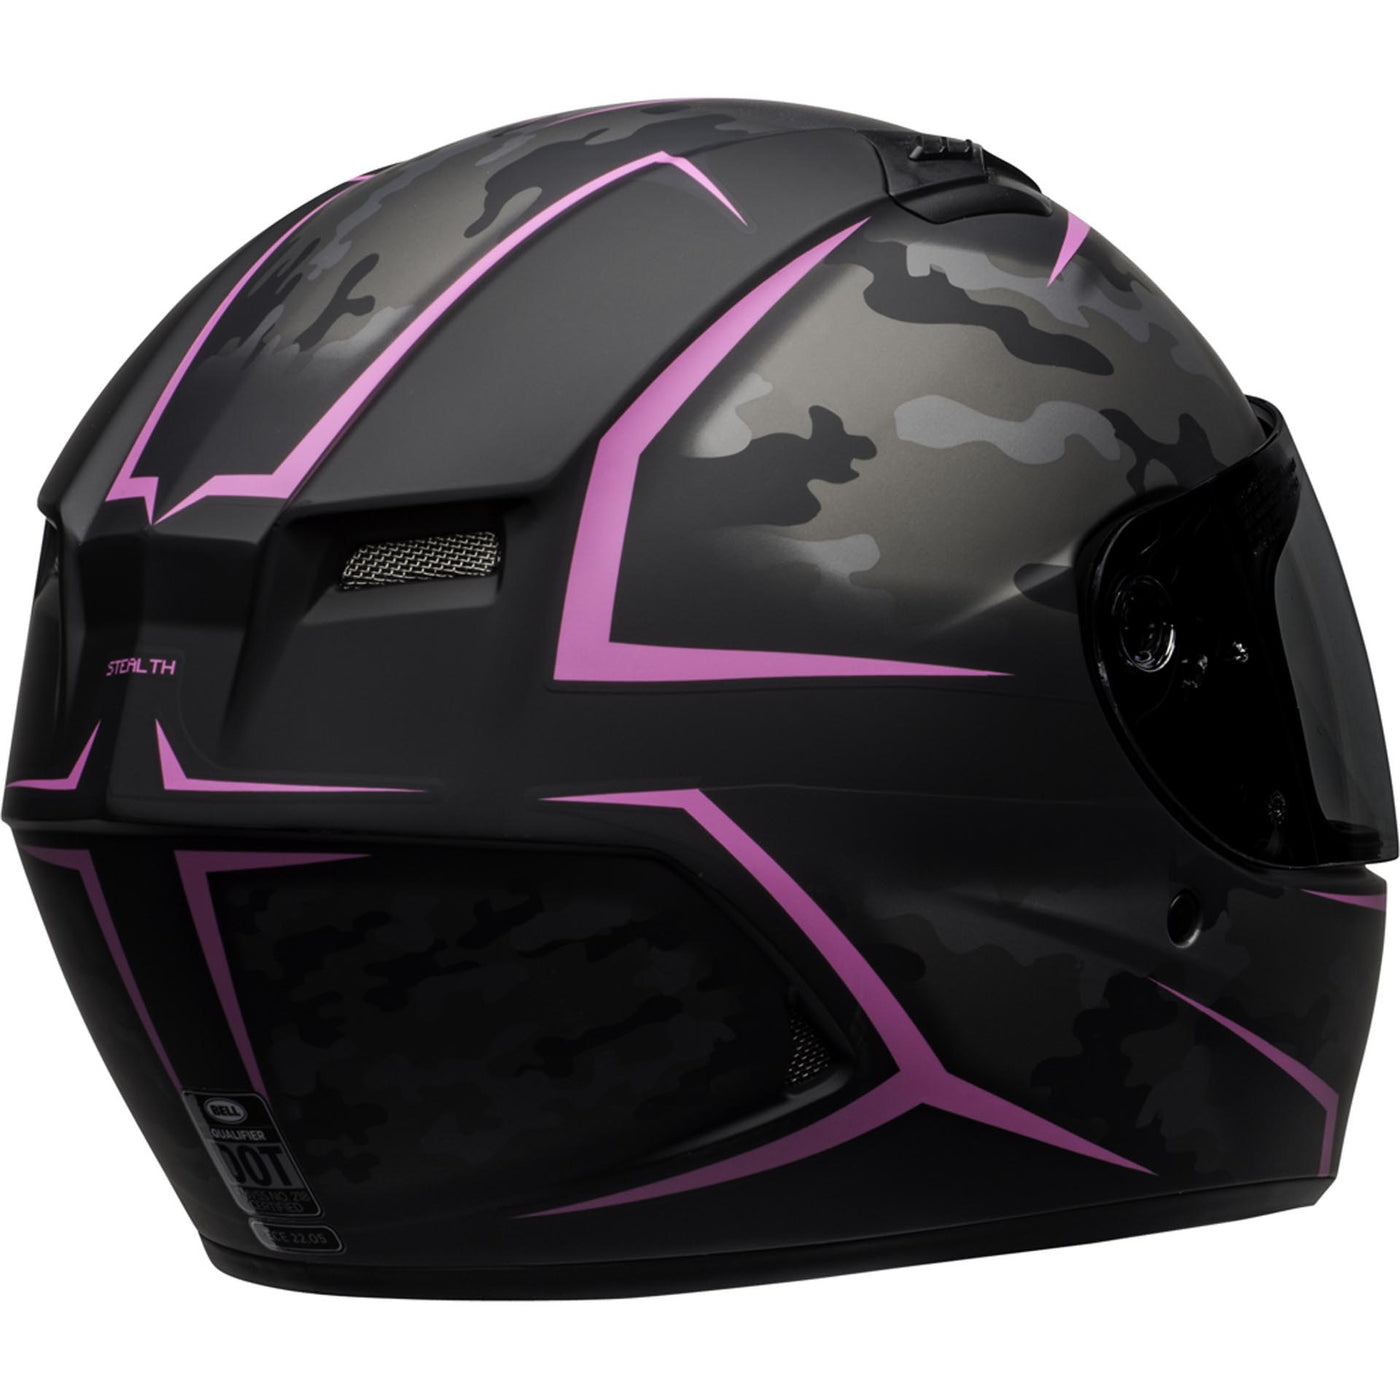 Bell Qualifier Motorcycle Full Face Helmet Stealth Camo Matte Black/Pink